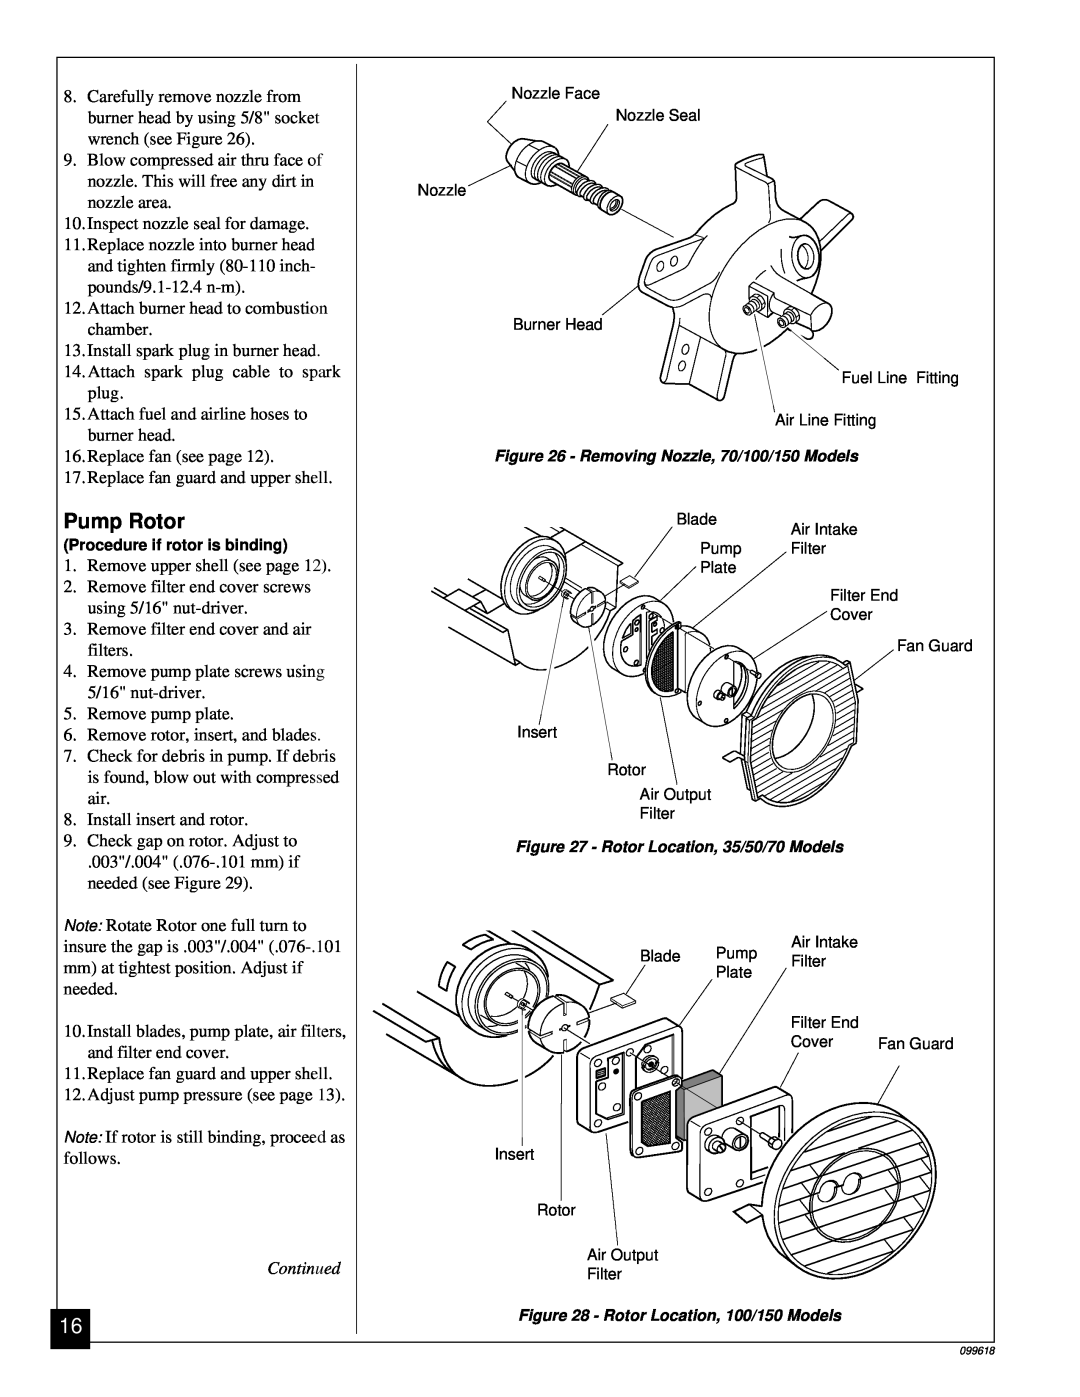 Desa 50 owner manual Pump Rotor, Continued 